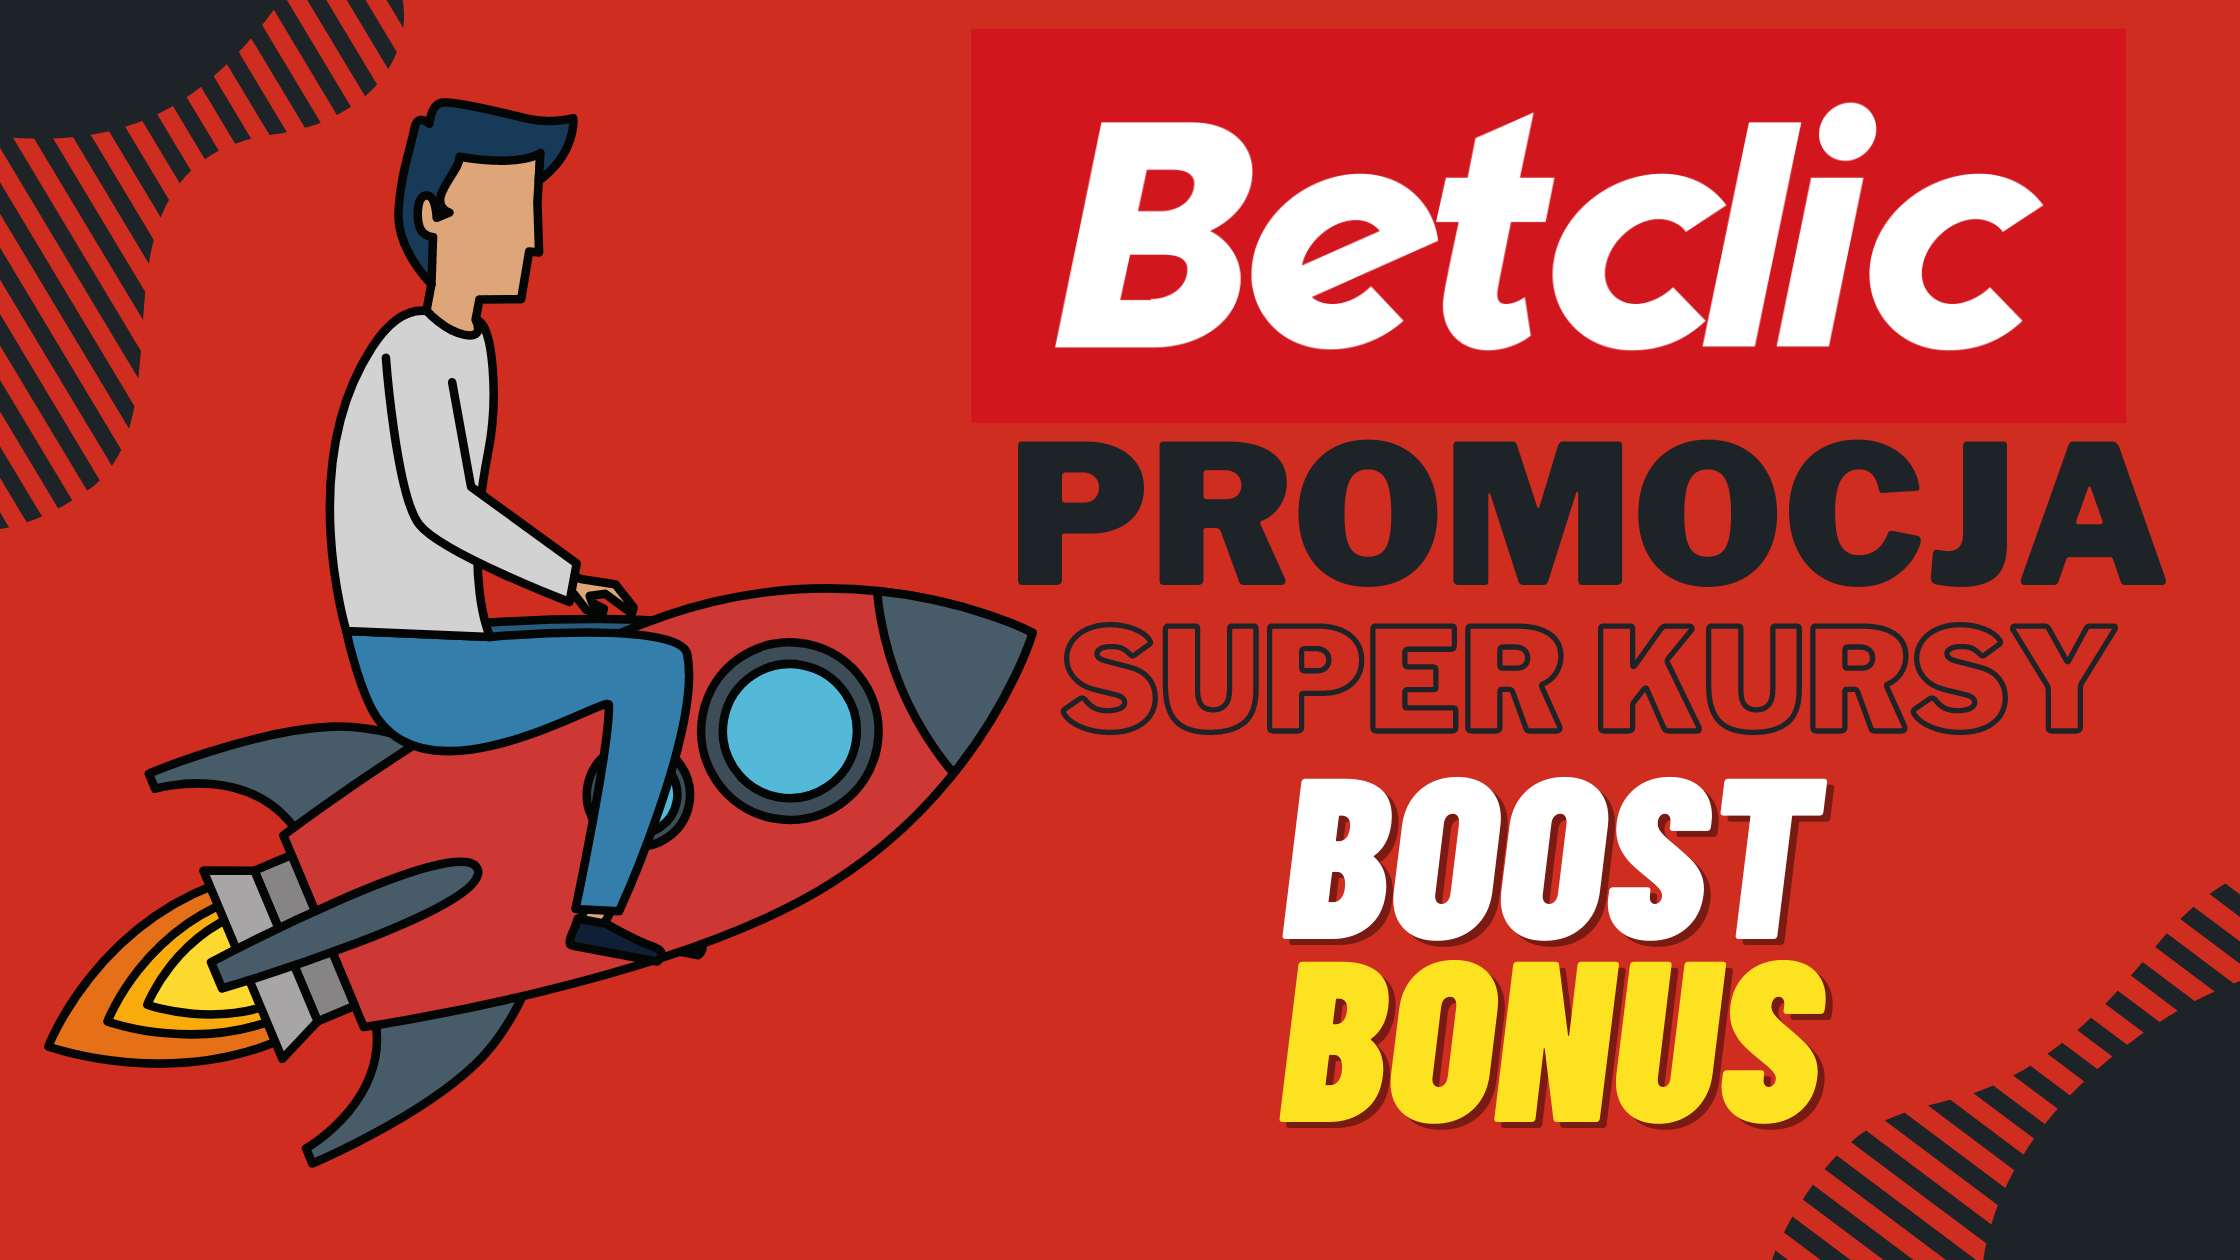 Promocja Betclic super kursy - Boost bonus